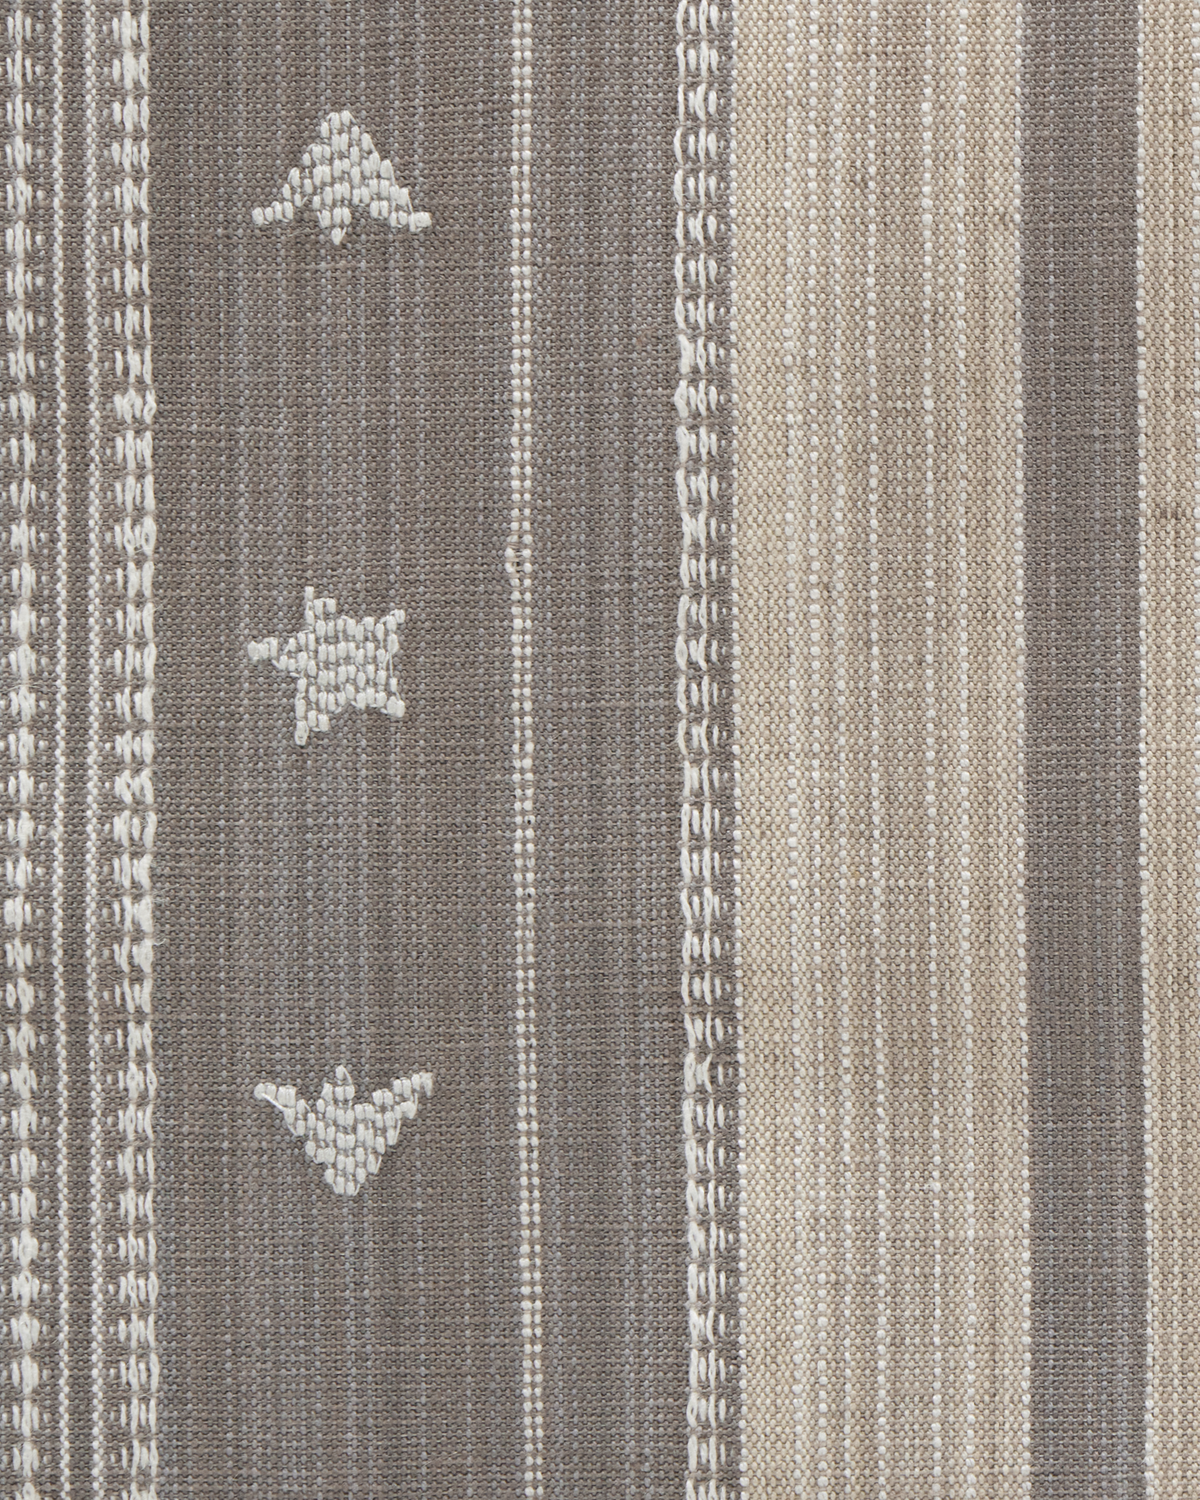 Budding Stripe Fabric in Gray